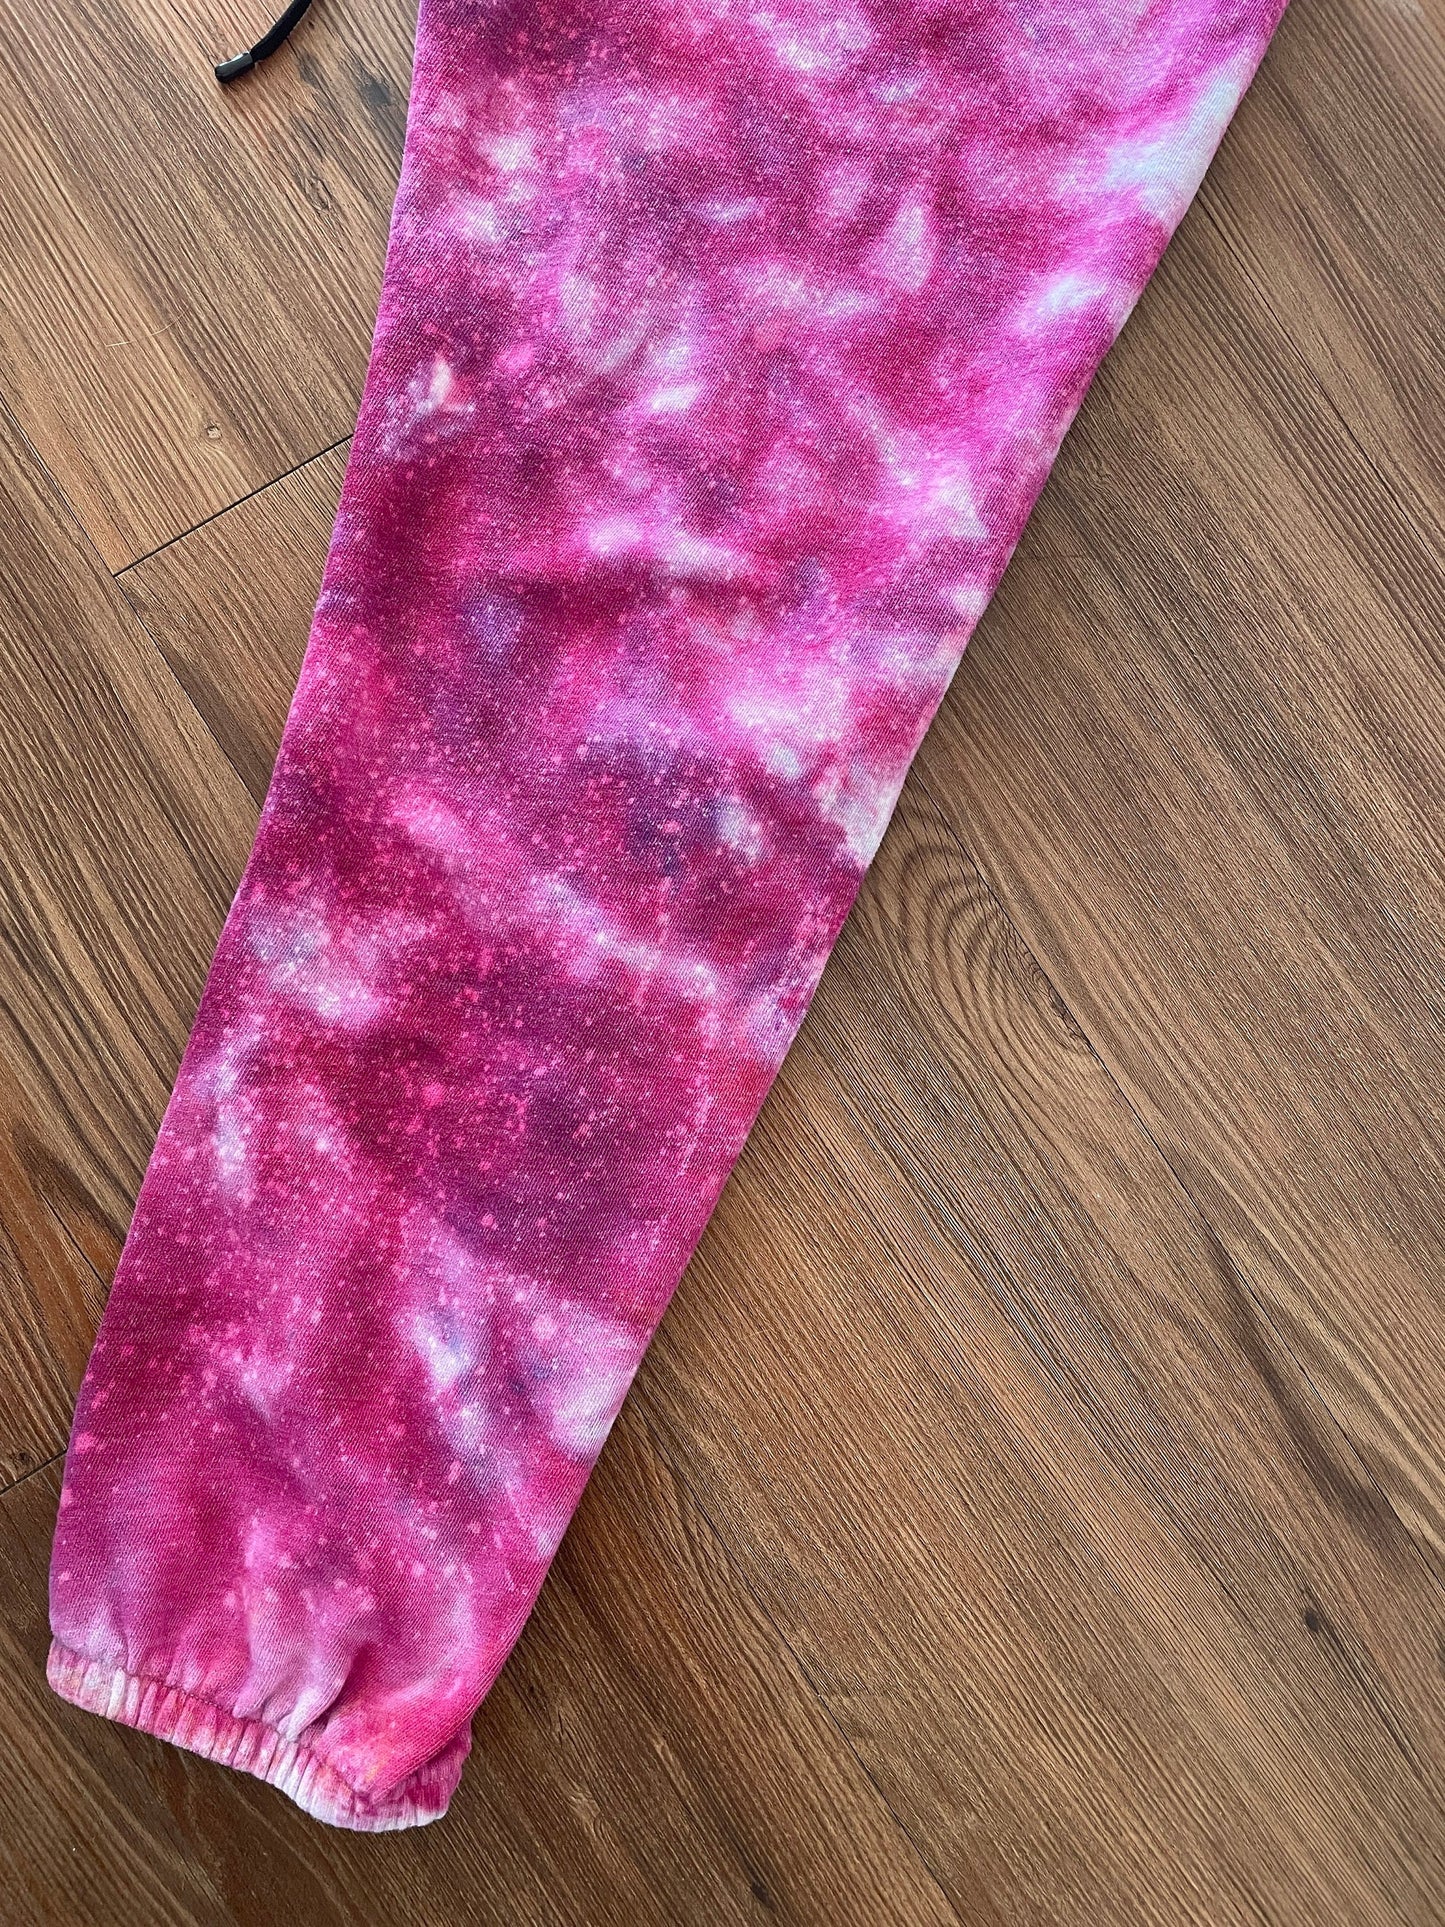 Pink Galaxy Victoria Sport Handmade Ice Dye Jogger Pants | Reverse Tie Dye Women’s Size Large Loungewear | Sustainably Made